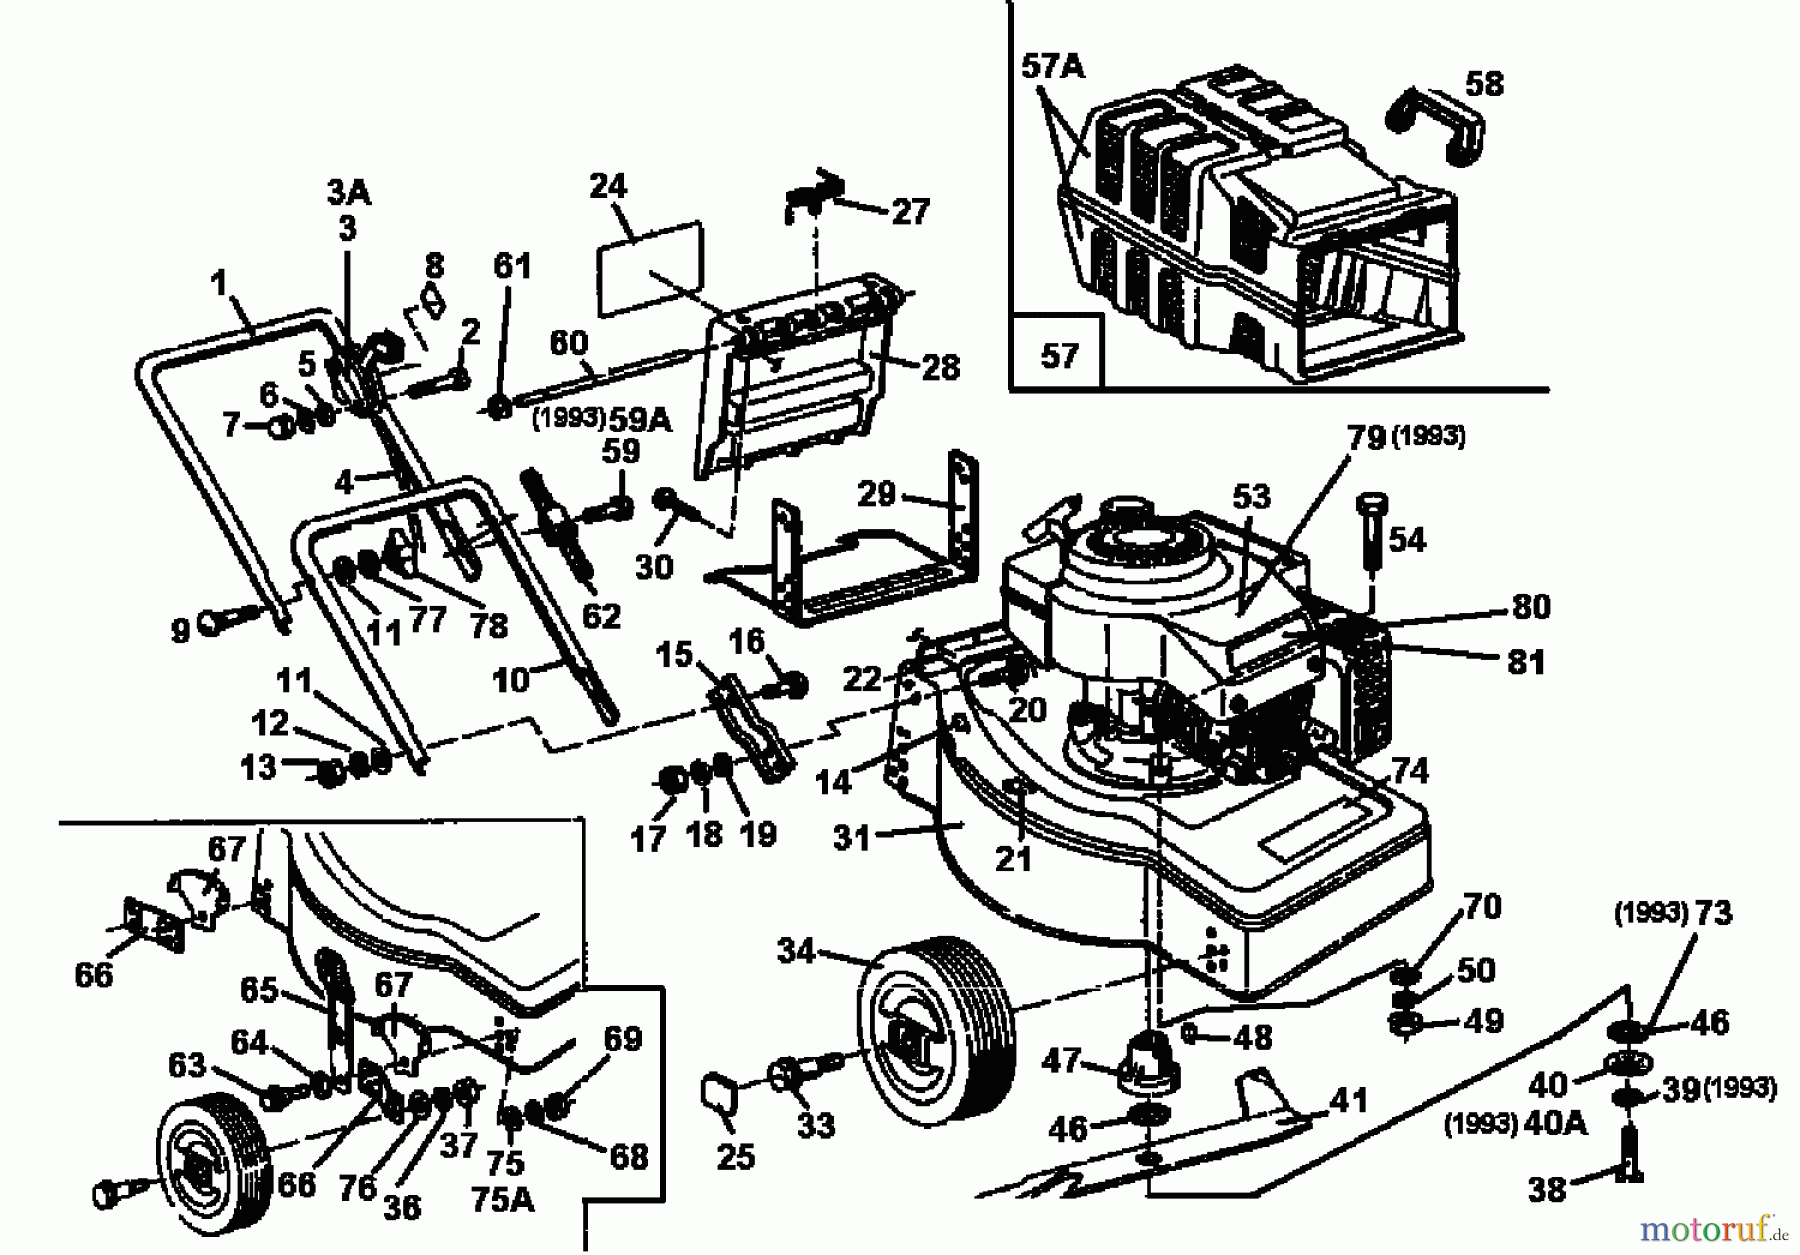  Diana Petrol mower 45 B 02813.06  (1994) Basic machine